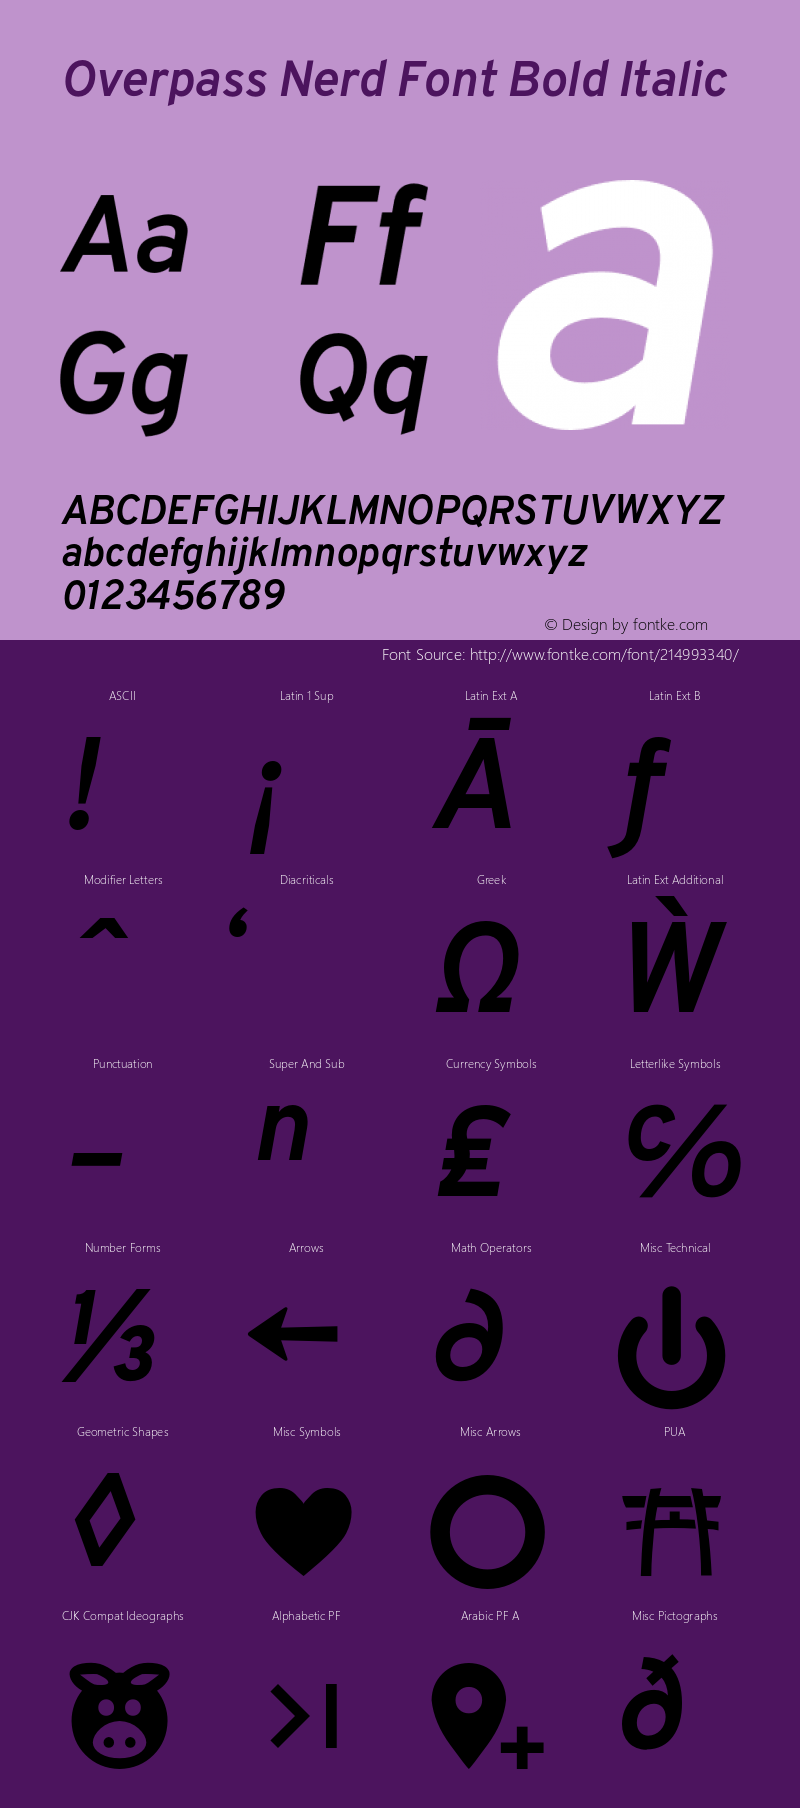 Overpass Bold Italic Nerd Font Complete Version 003.000;Nerd Fonts 2.1.0图片样张